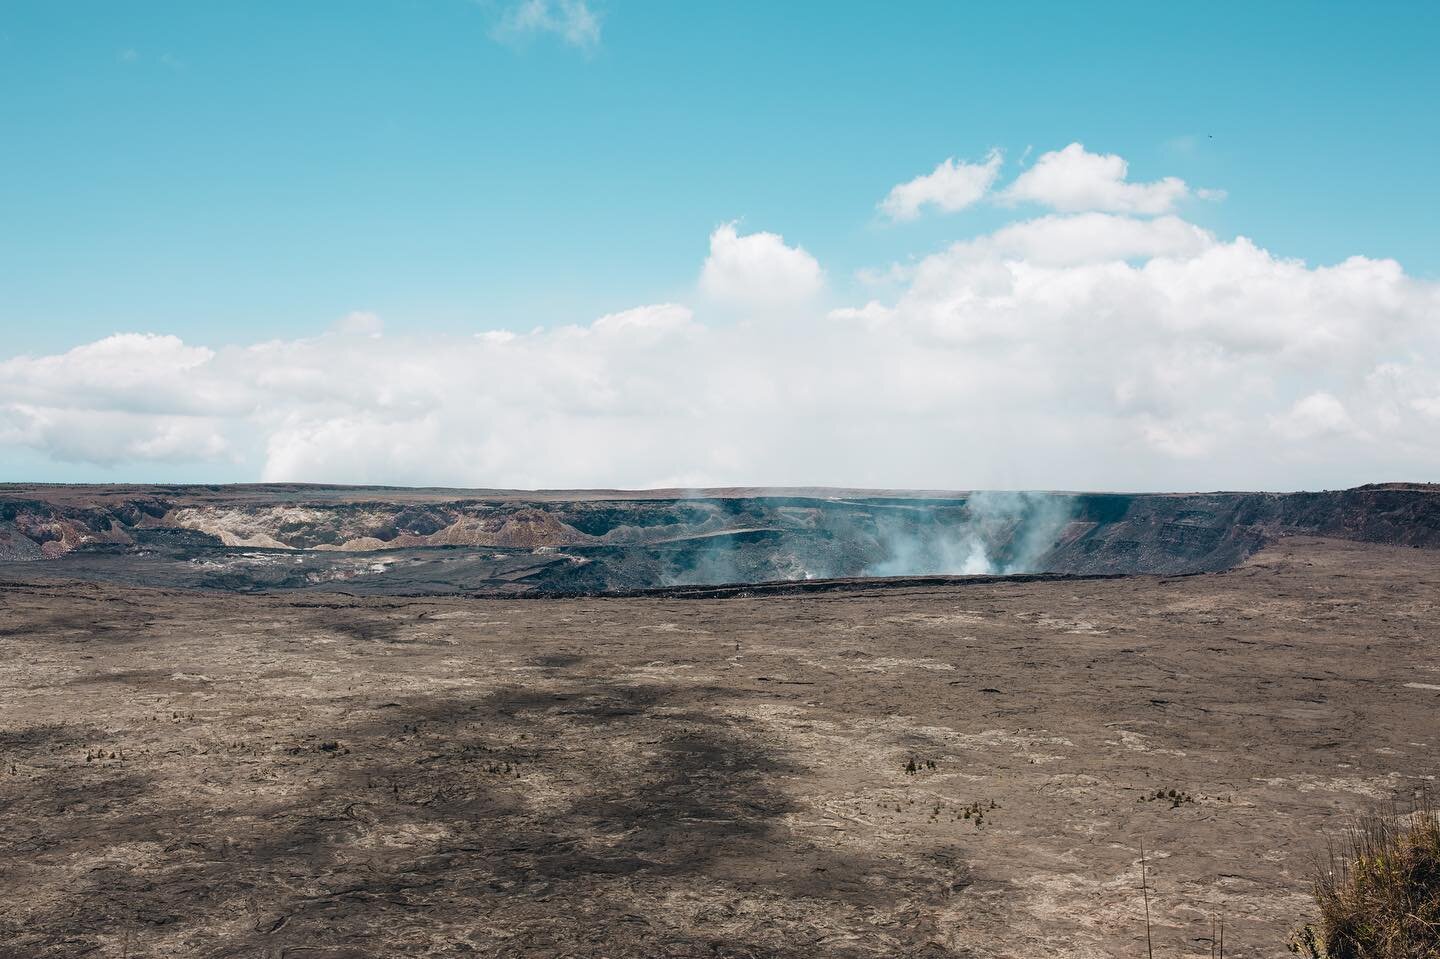 Tempting fate at Hawaii Volcanoes National Park 🌋 😳

#thebigisland #hawaii  #explorehawaii #volcanoesnationalpark #nationalparks #boggnandez #chrissi_hawaii #chrissi_volcanoesnationalpark